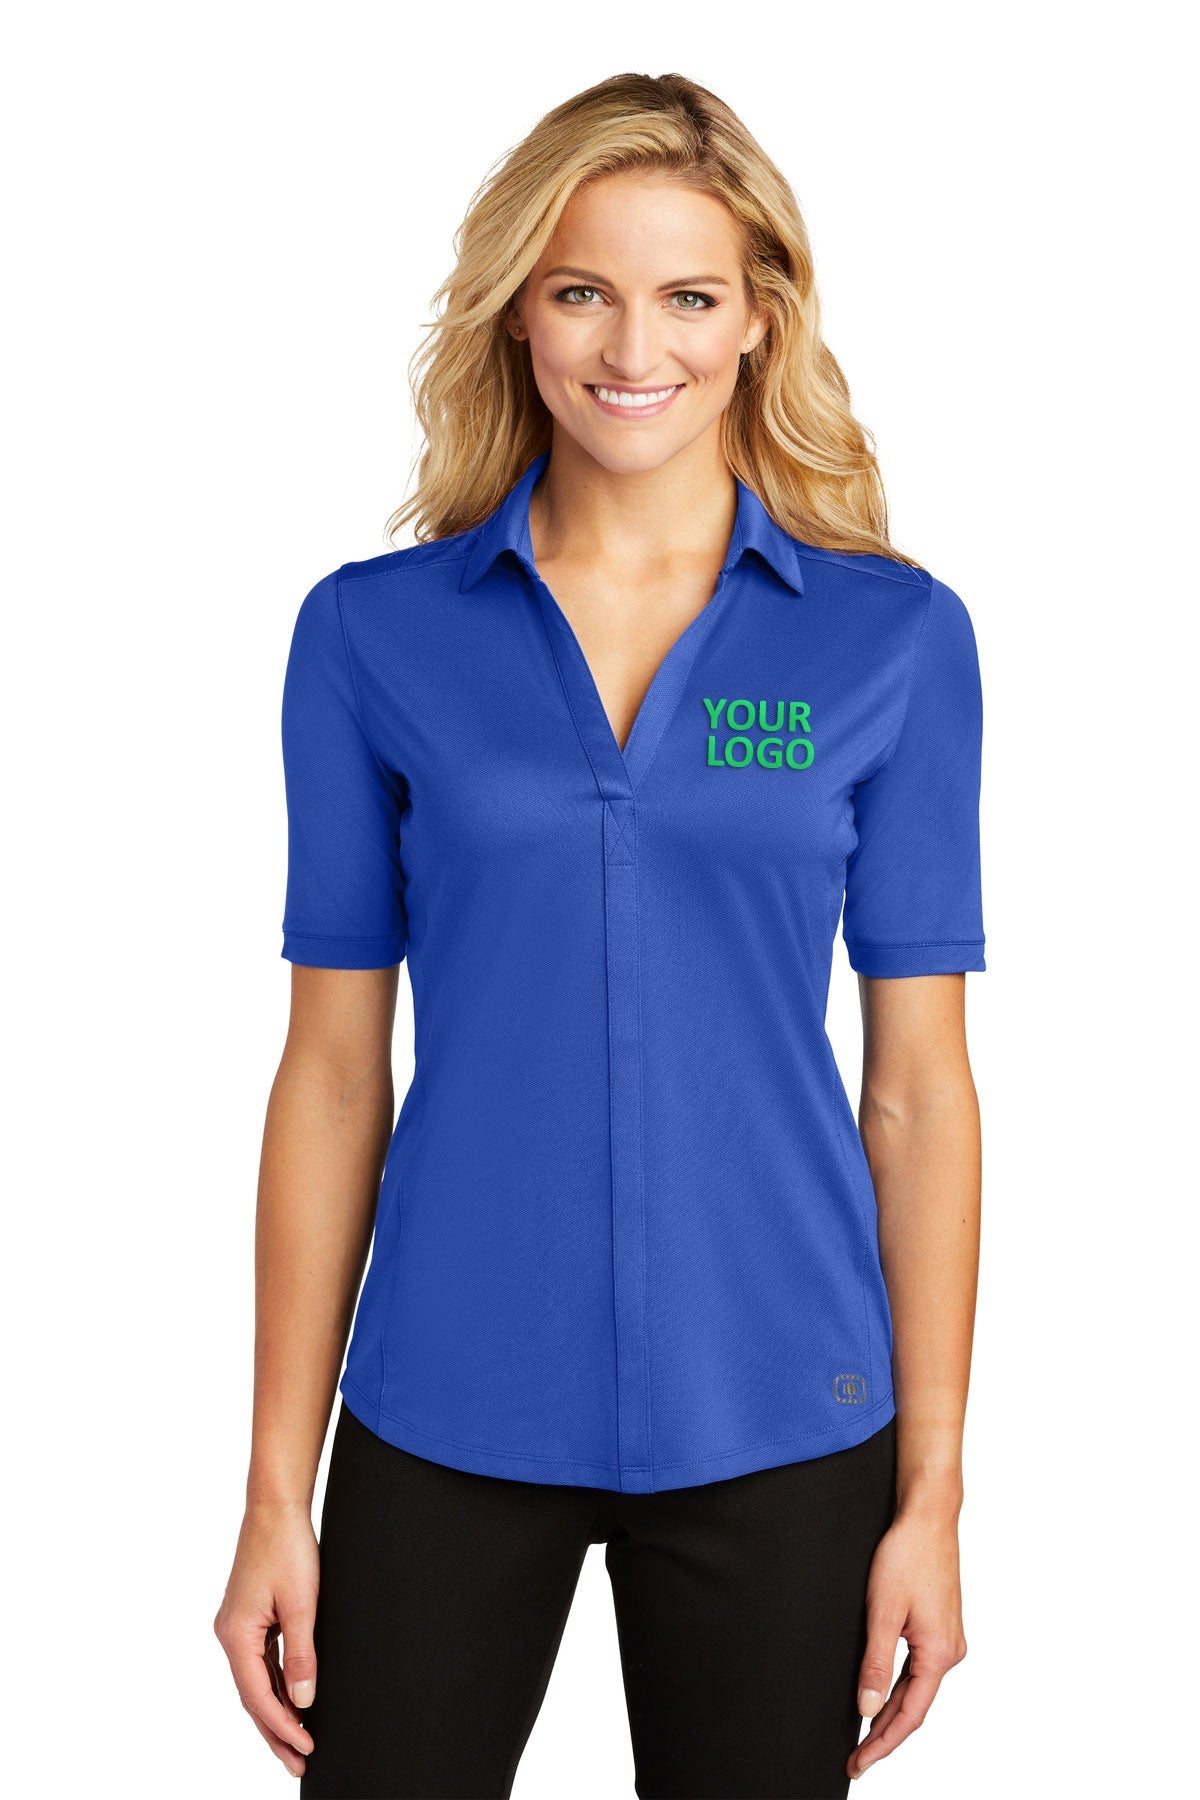 OGIO Enzyme Blue LOG130 polo shirts company logos